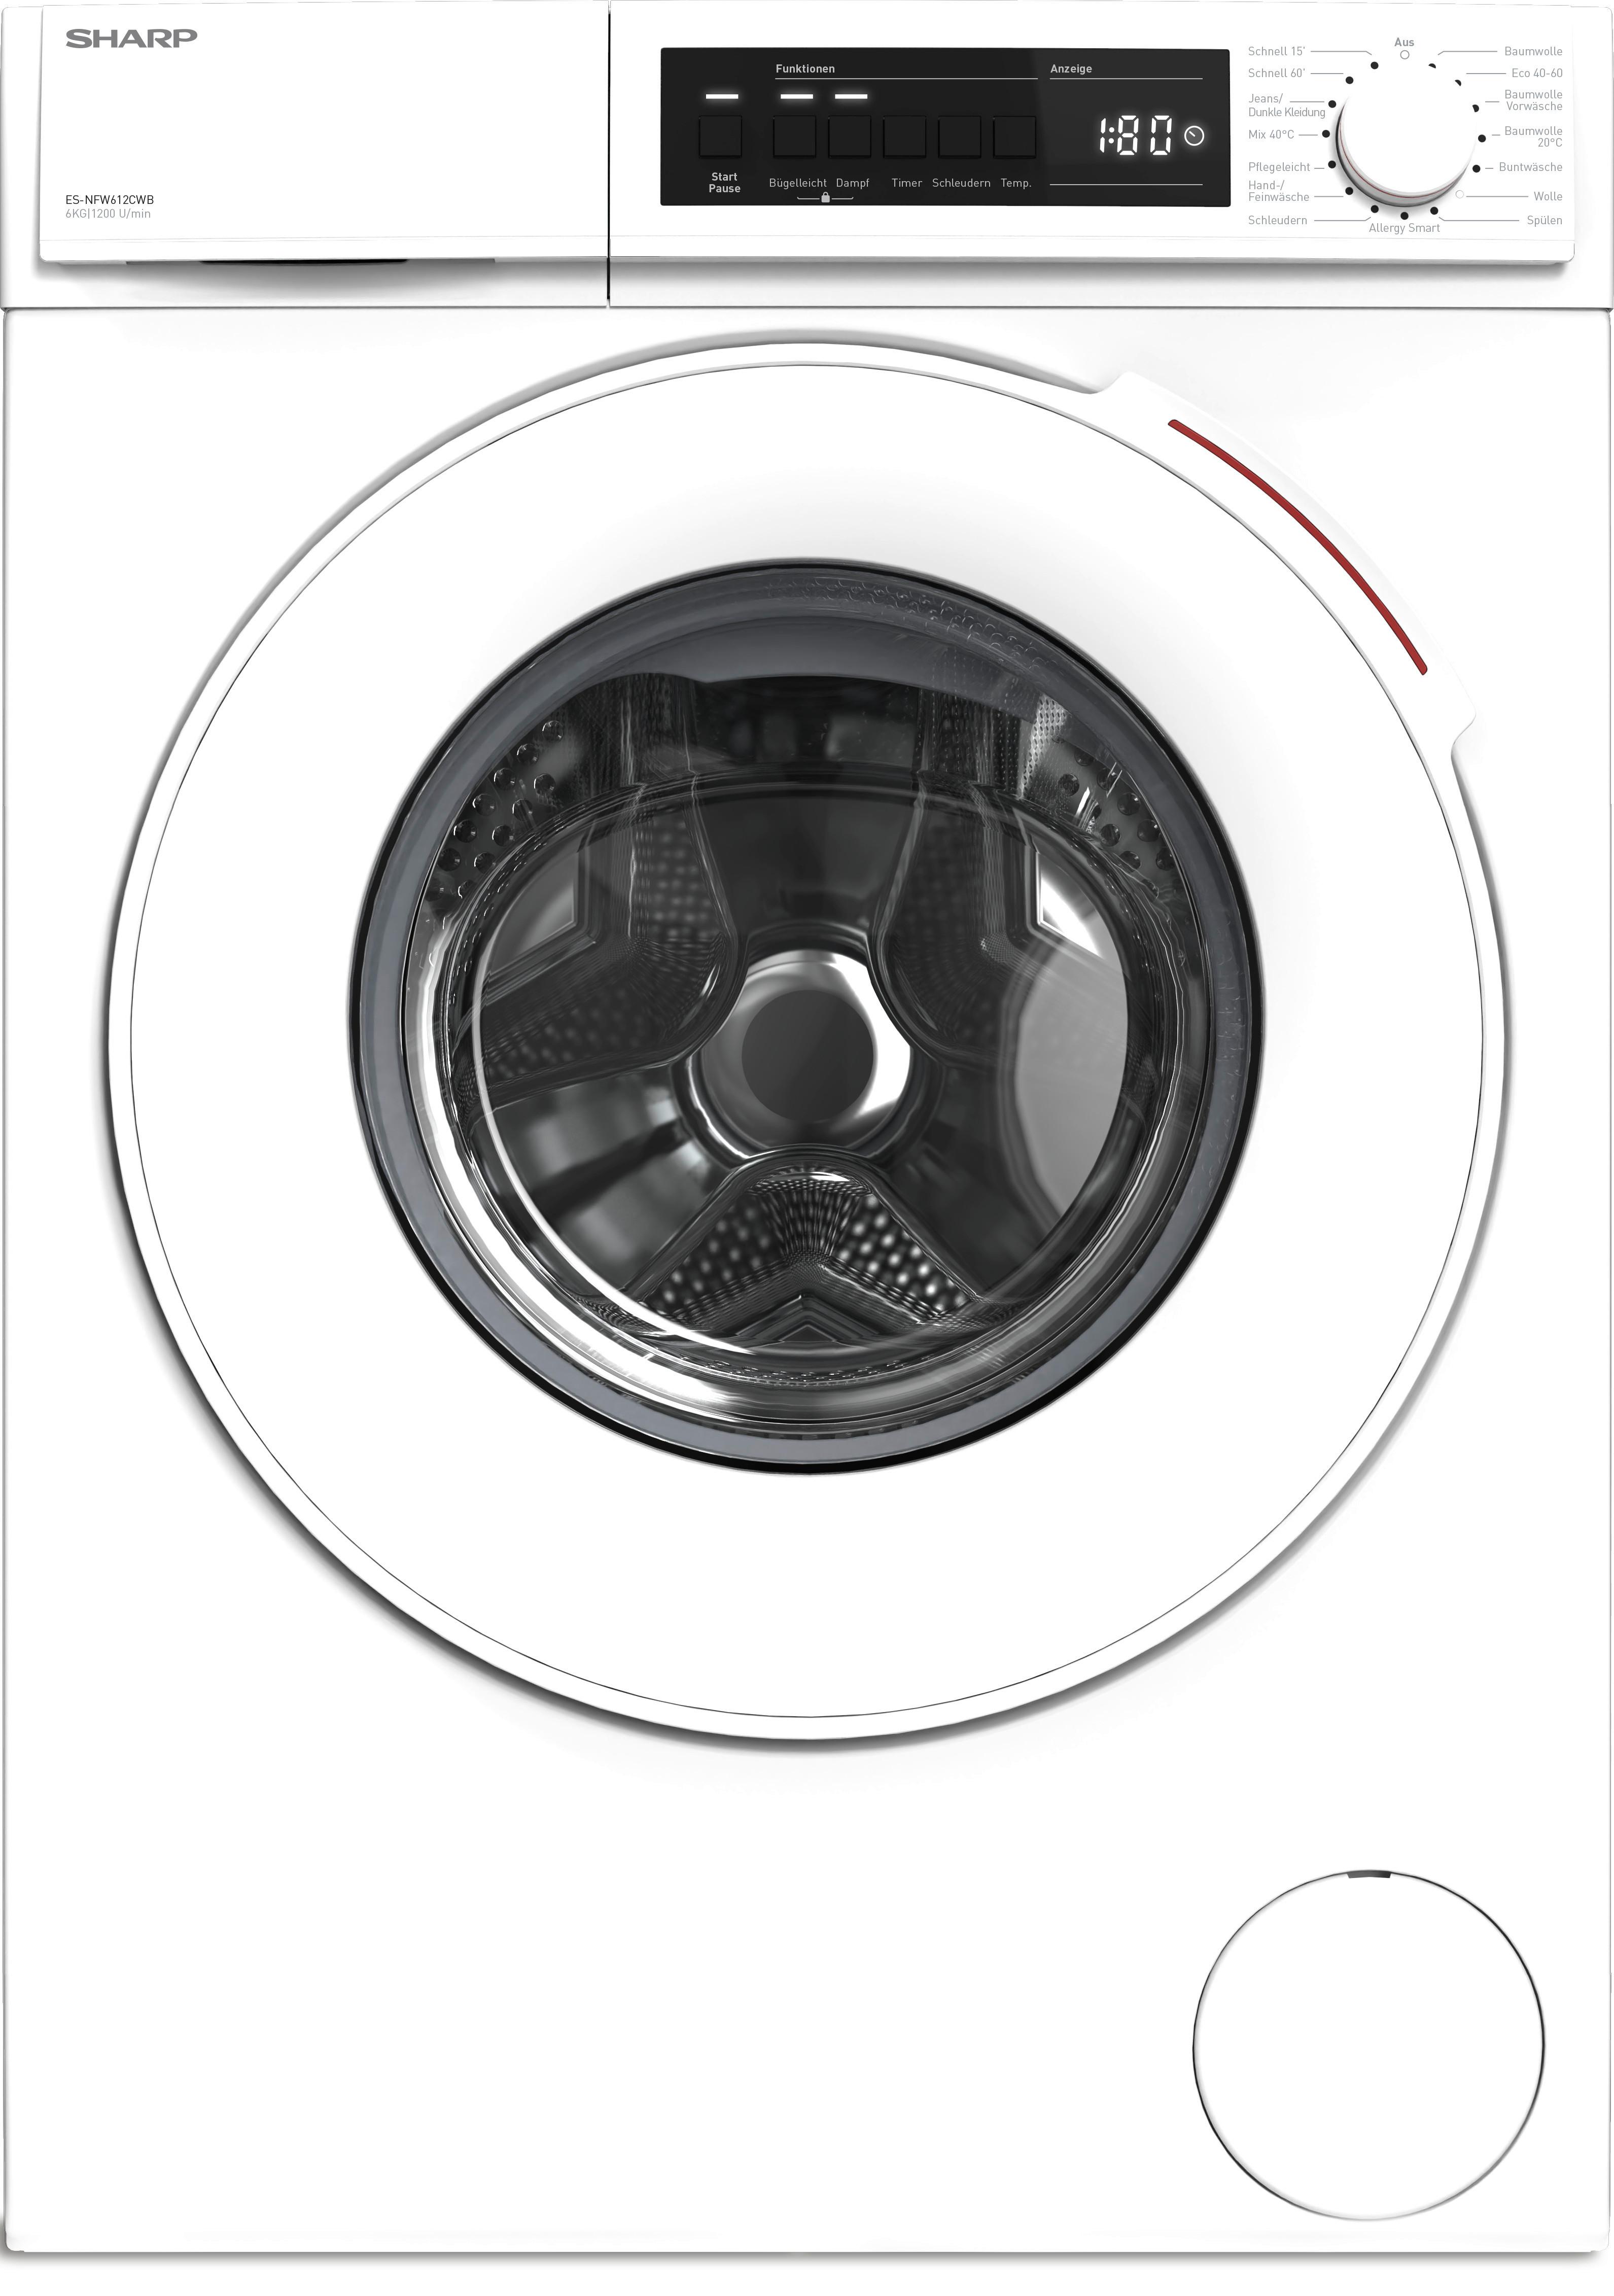 Waschmaschine Es-Nfw612cwb 6 Kg 1200 U/Min Aquastop - Weiß, Basics, Kunststoff/Metall (59,7/84,5/42cm) - Sharp